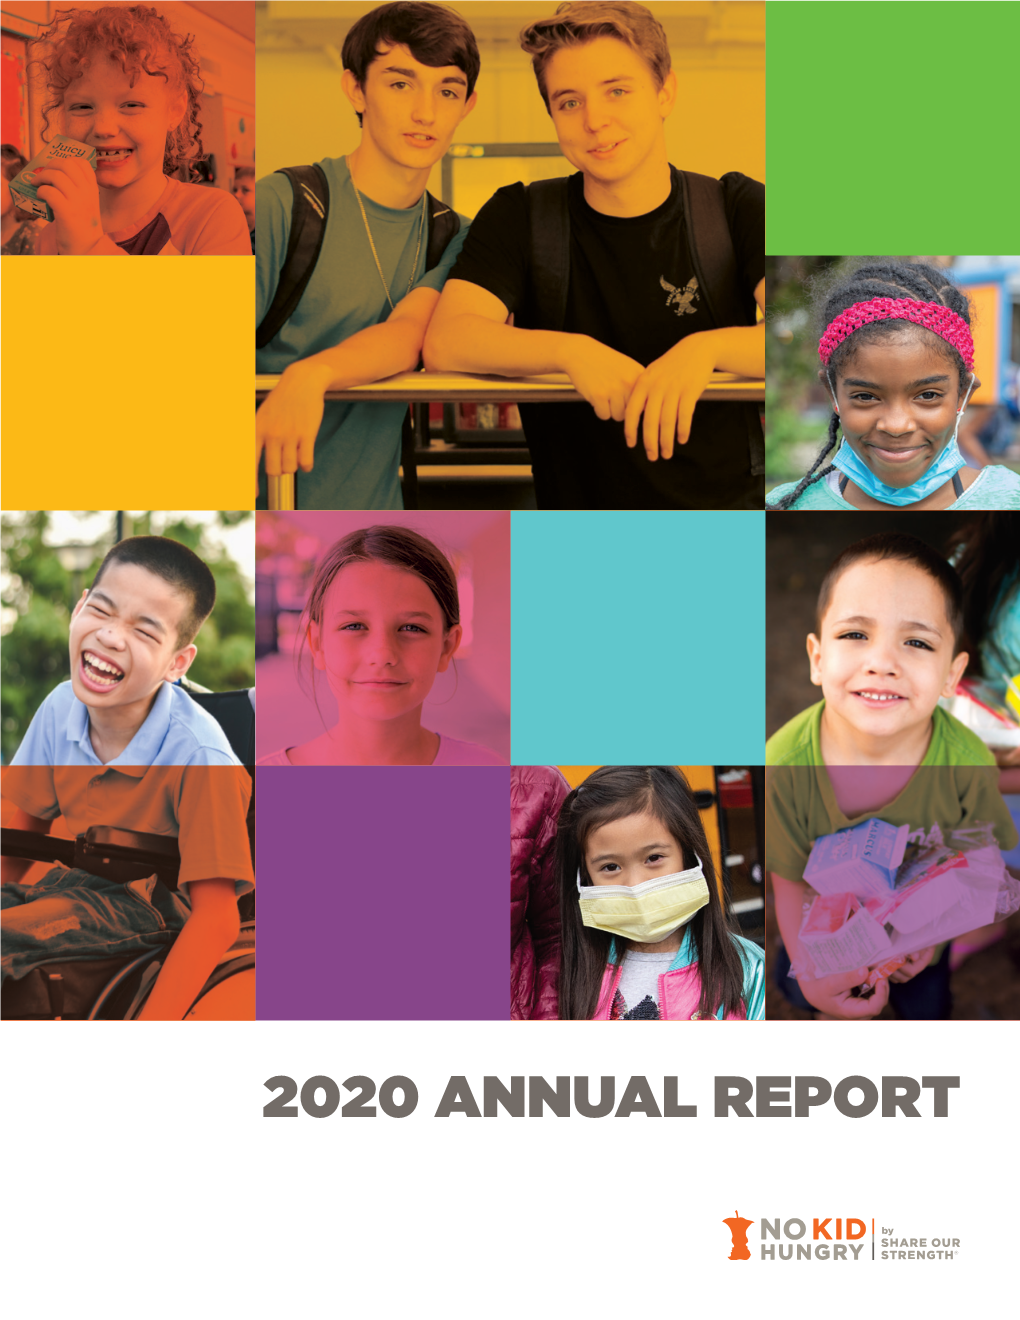 2020 Annual Report Dear Friends